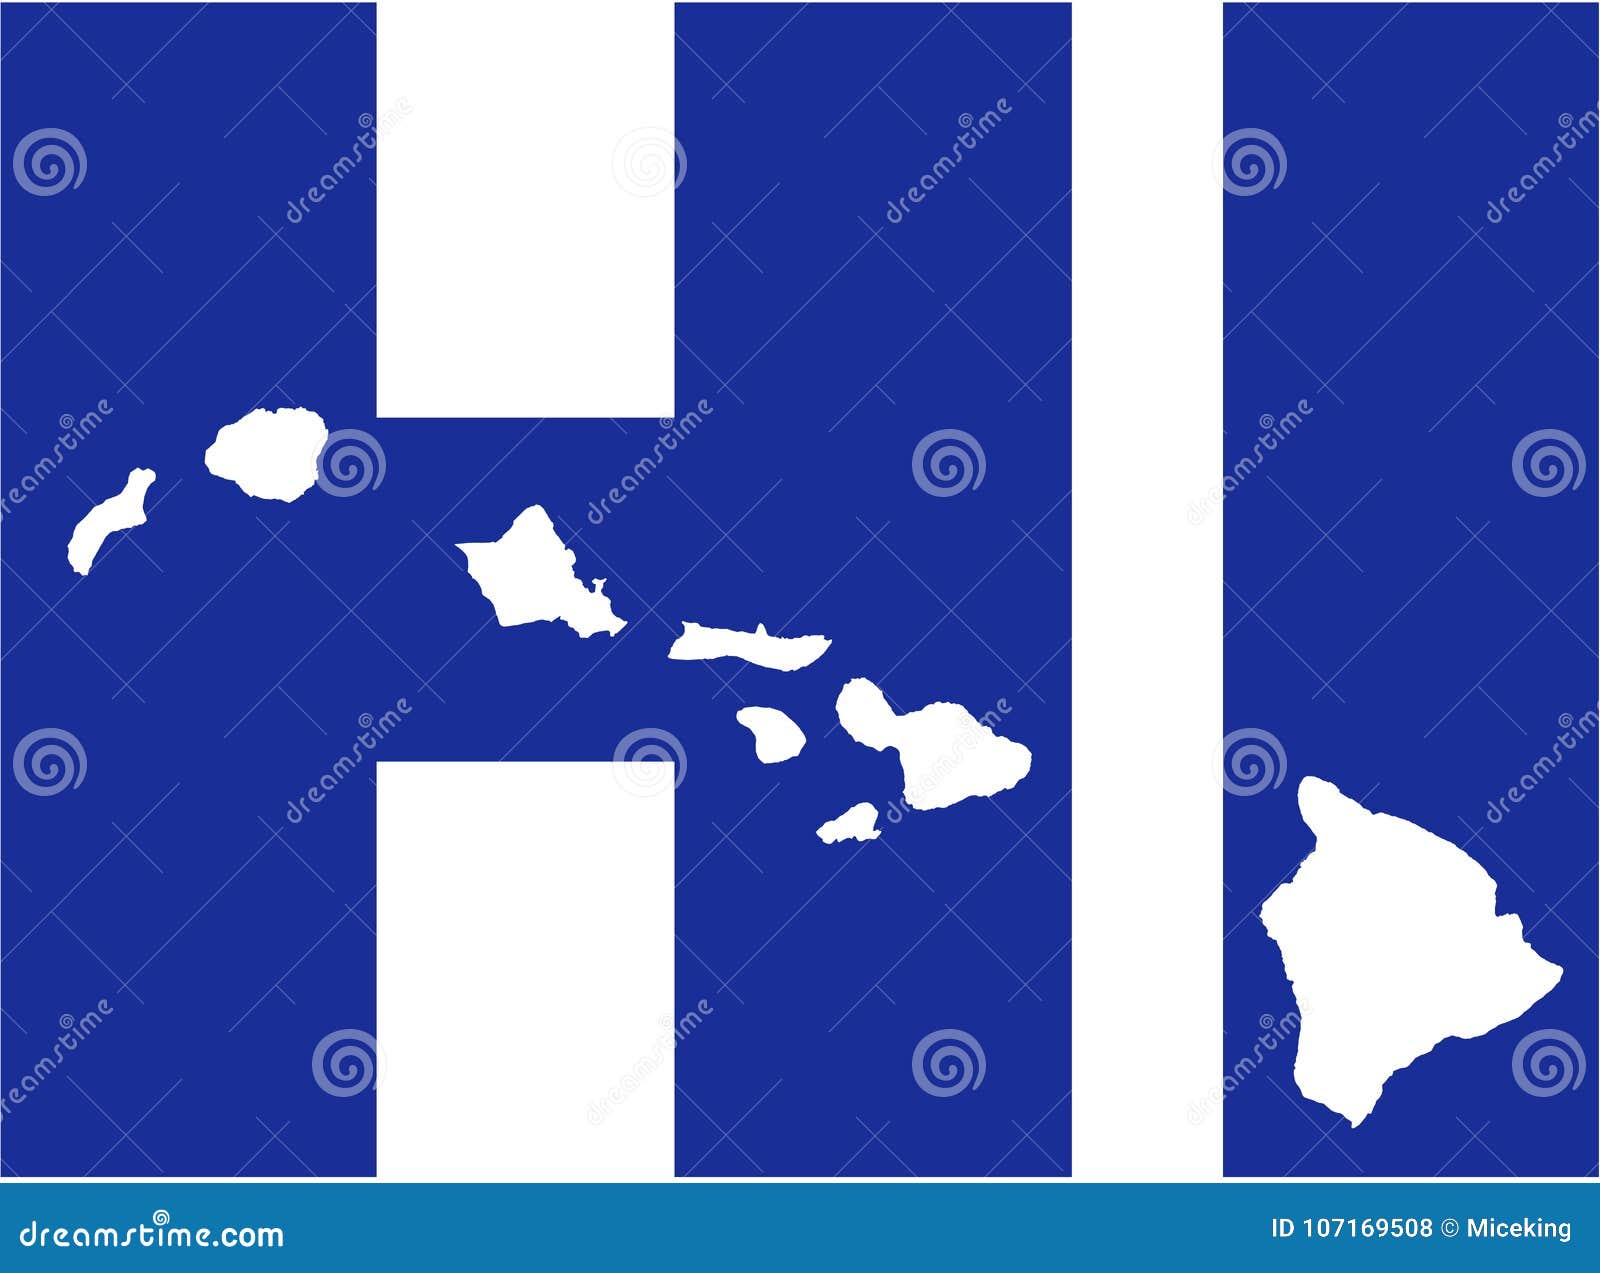 hawaii state abbreviations hi with map